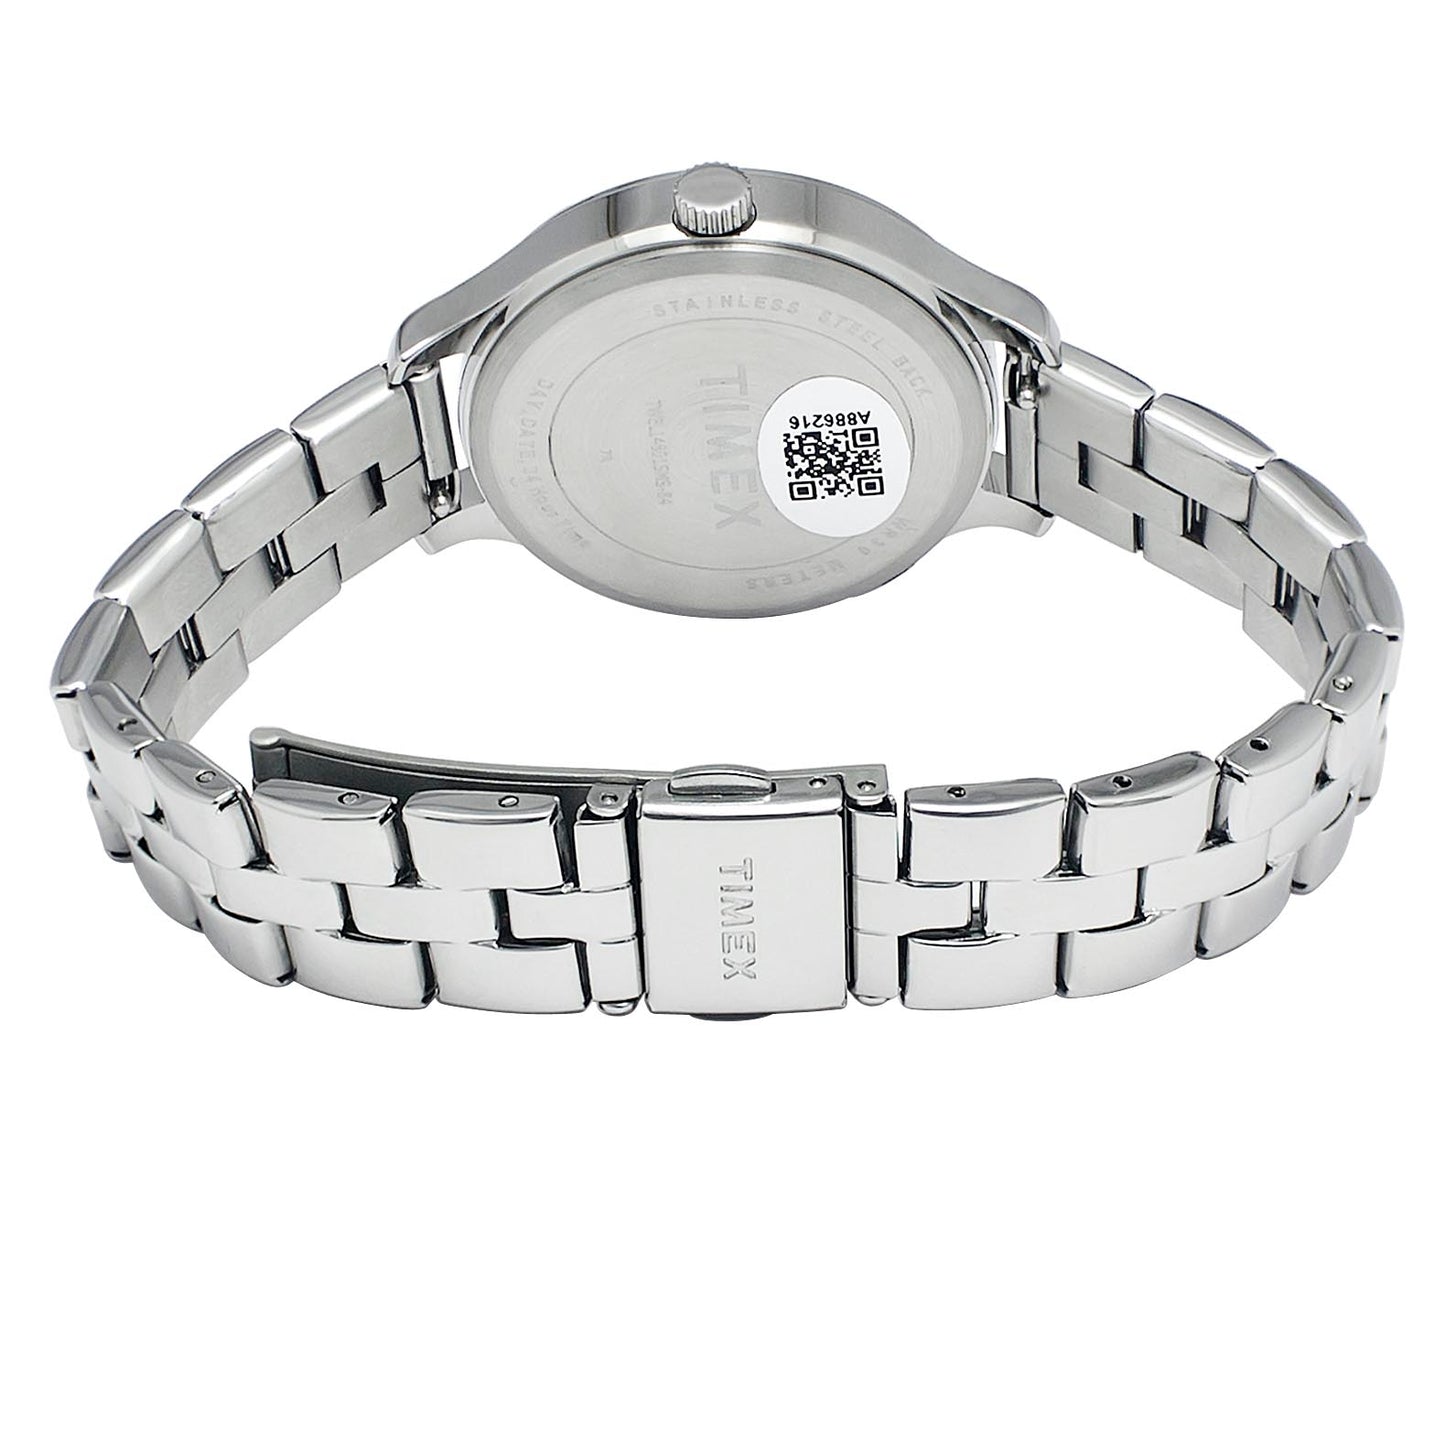 Timex Silver Dial Women Multifunction Watch - TWEL14800